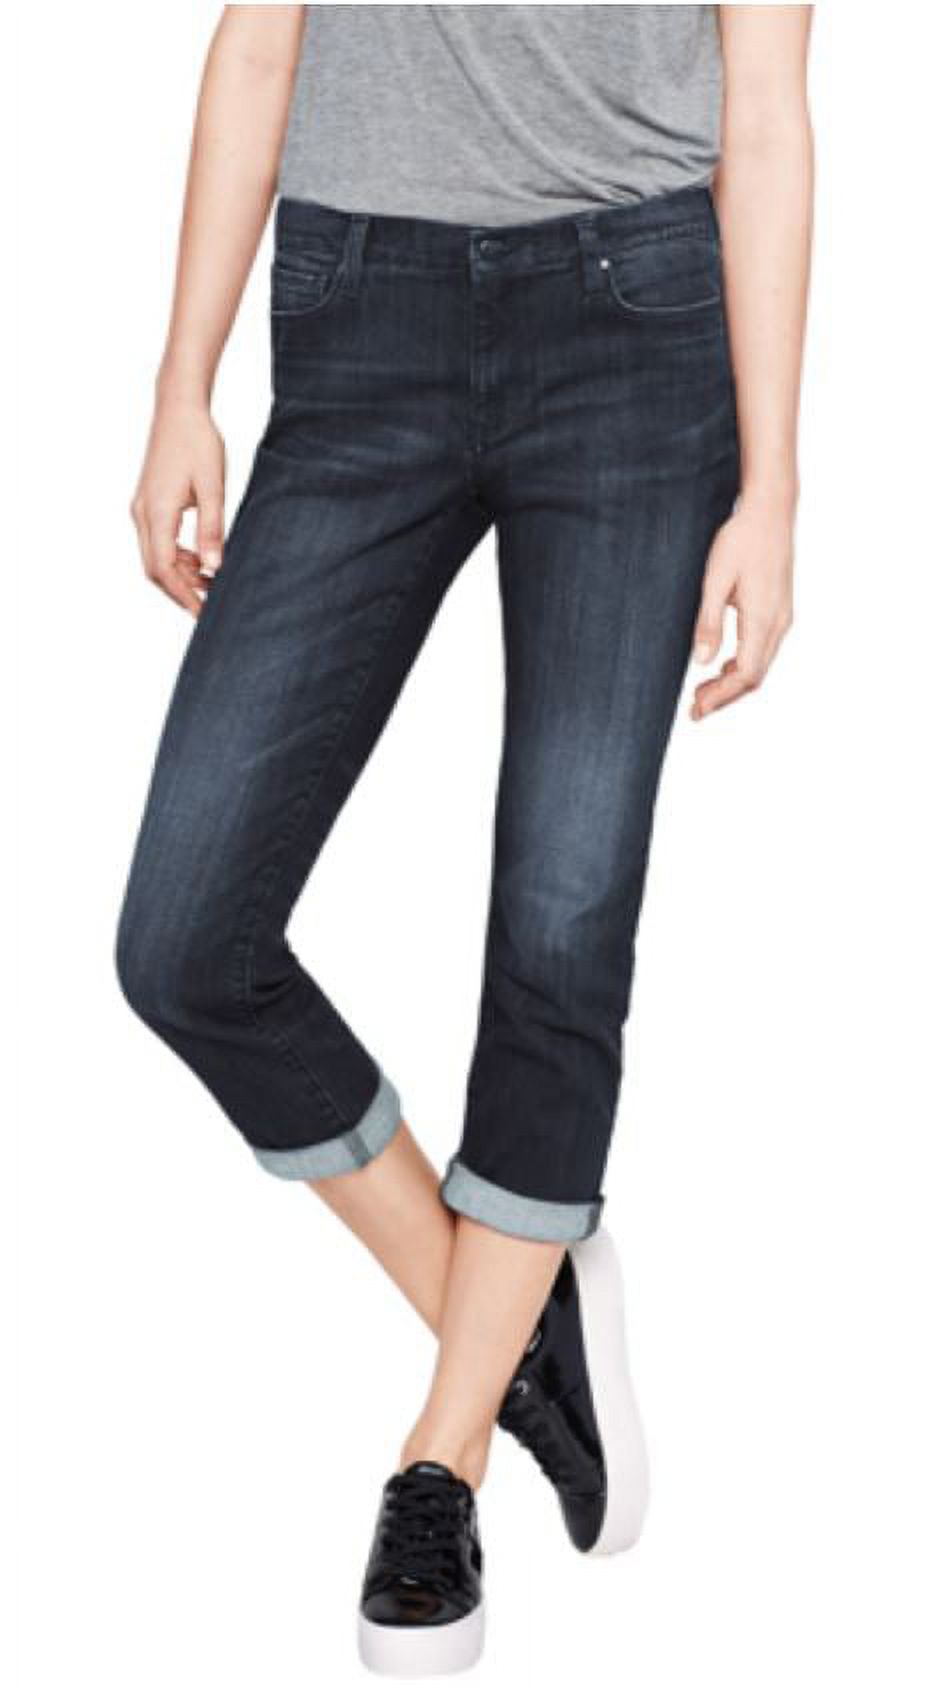 DKNY Womens Mid Rise Soho Skinny Crop Jeans (Dark Wash, 2) - image 1 of 3